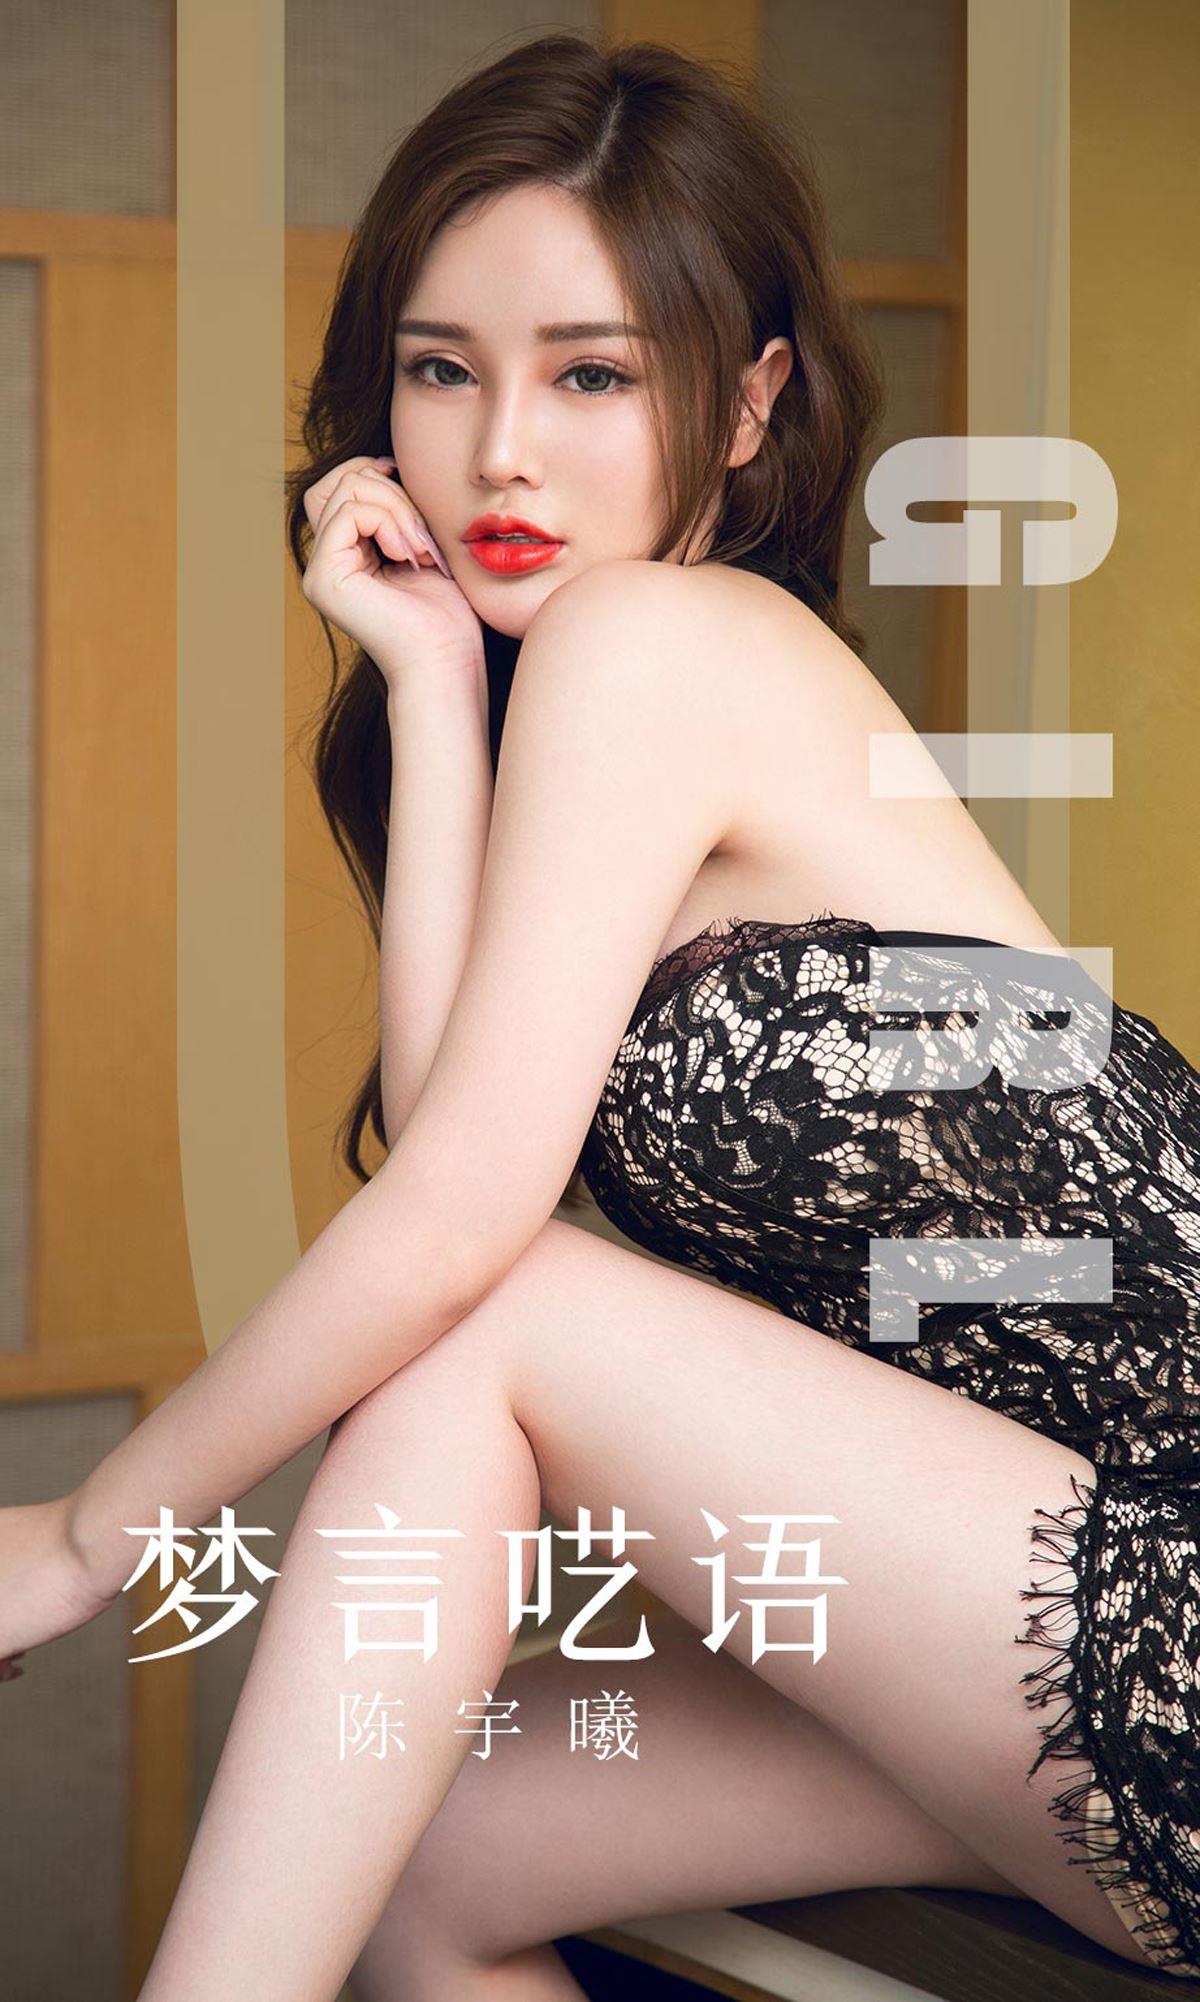 Ugirls 爱尤物 2019刊 No.1601 陈宇曦 - 2.jpg